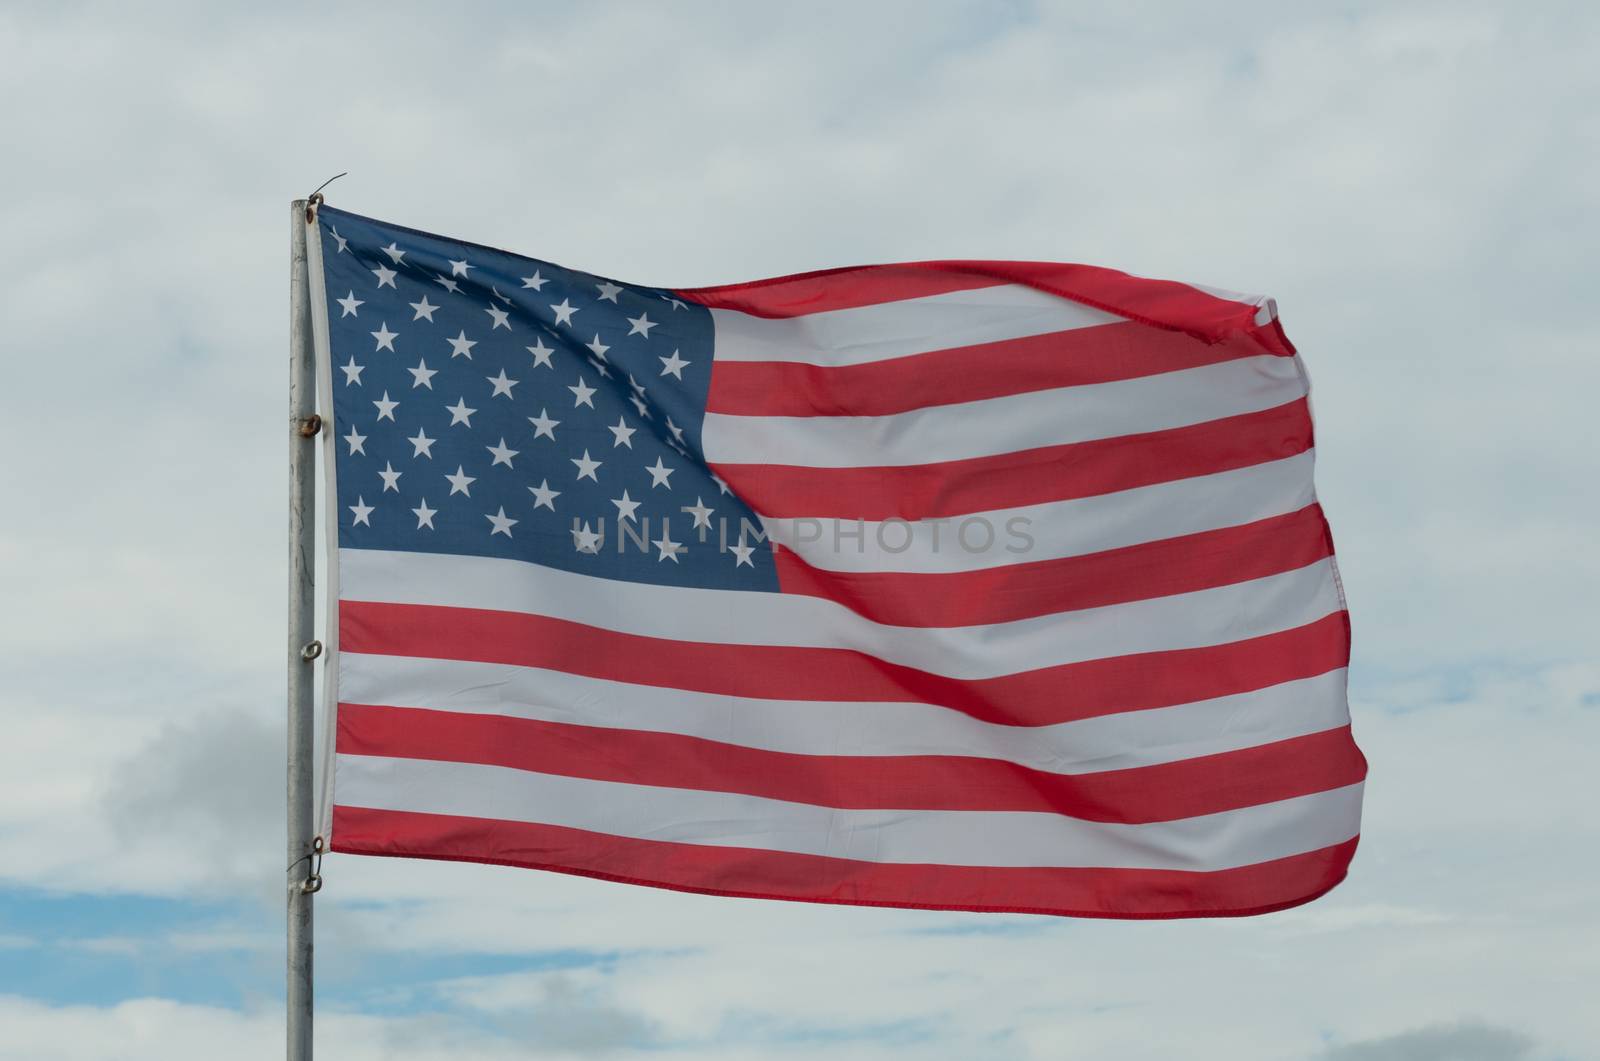 USA Flag by TimAwe